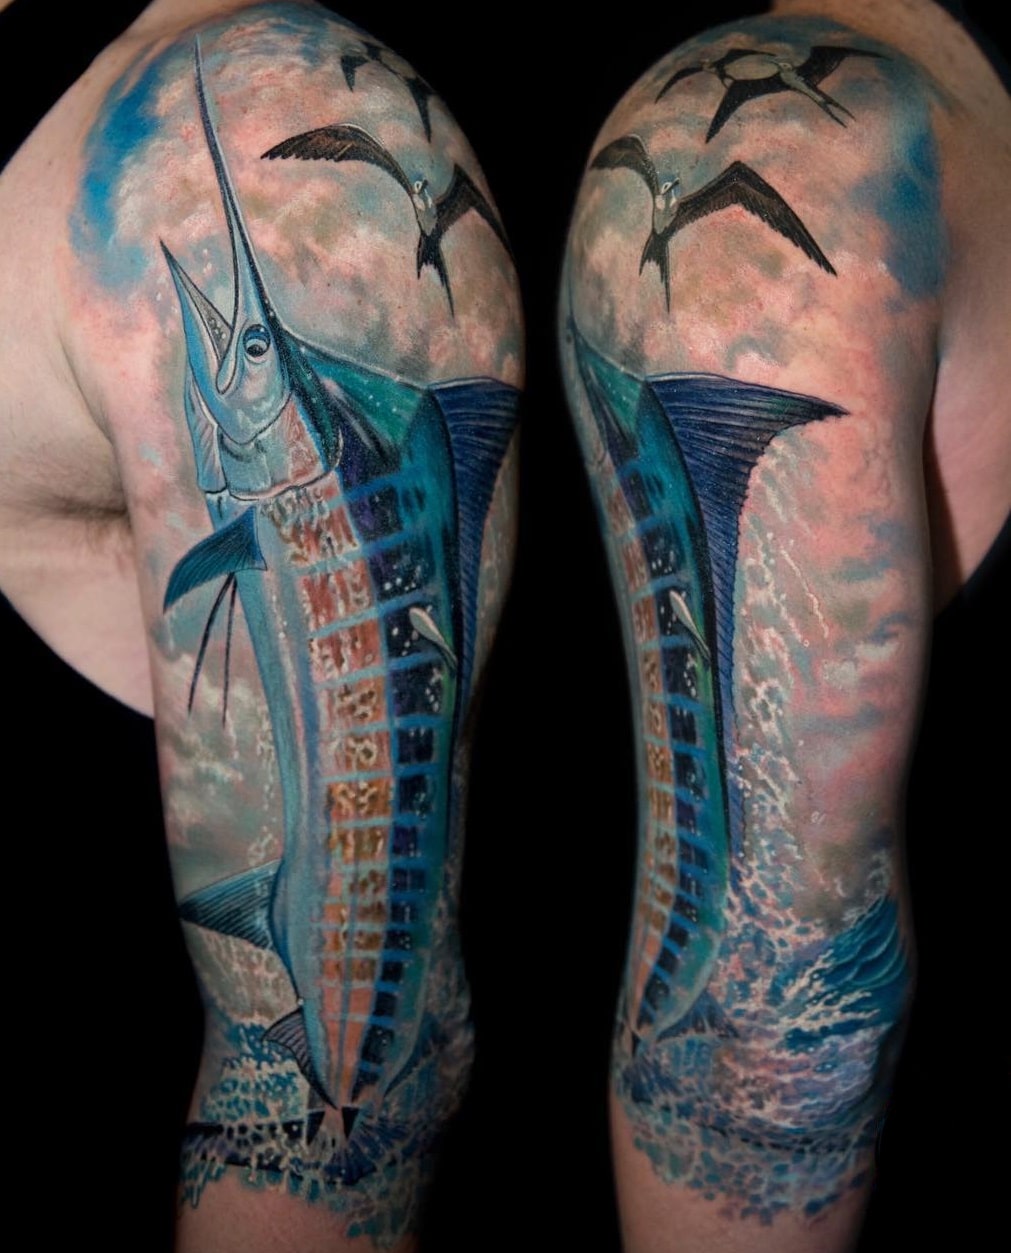 Blue Marlin Tattoo Ideas & Meanings